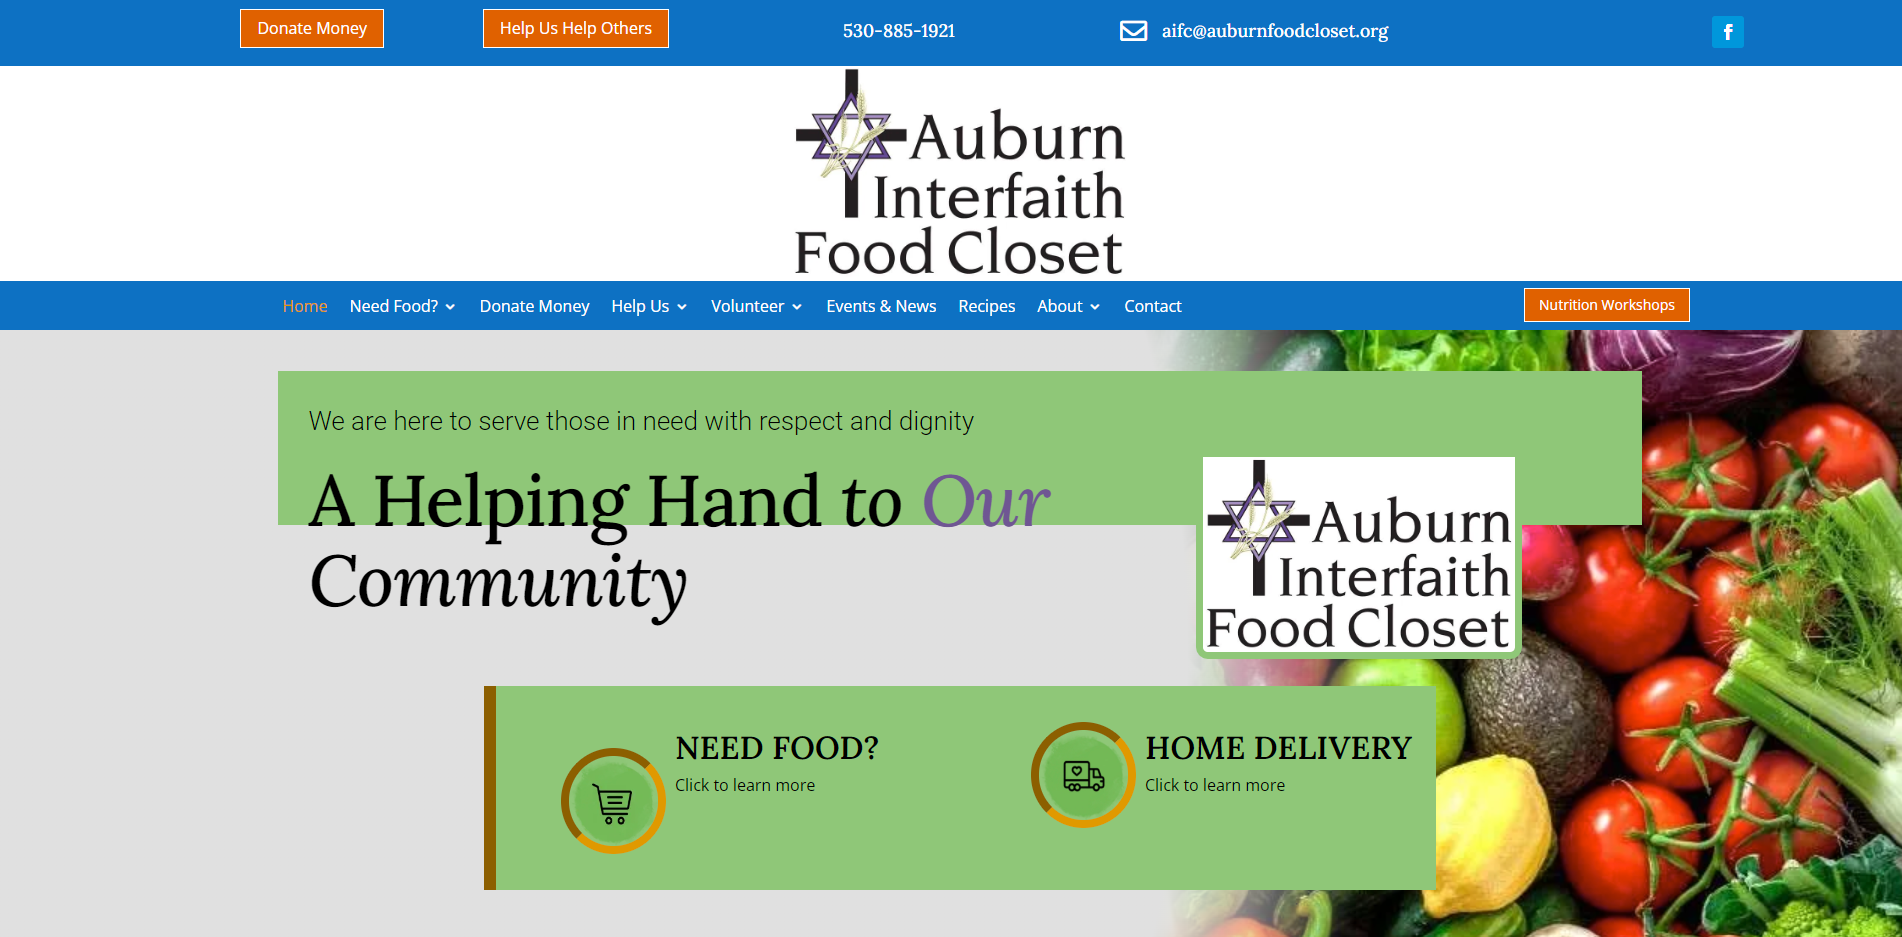 Auburn Interfaith Food Closet image